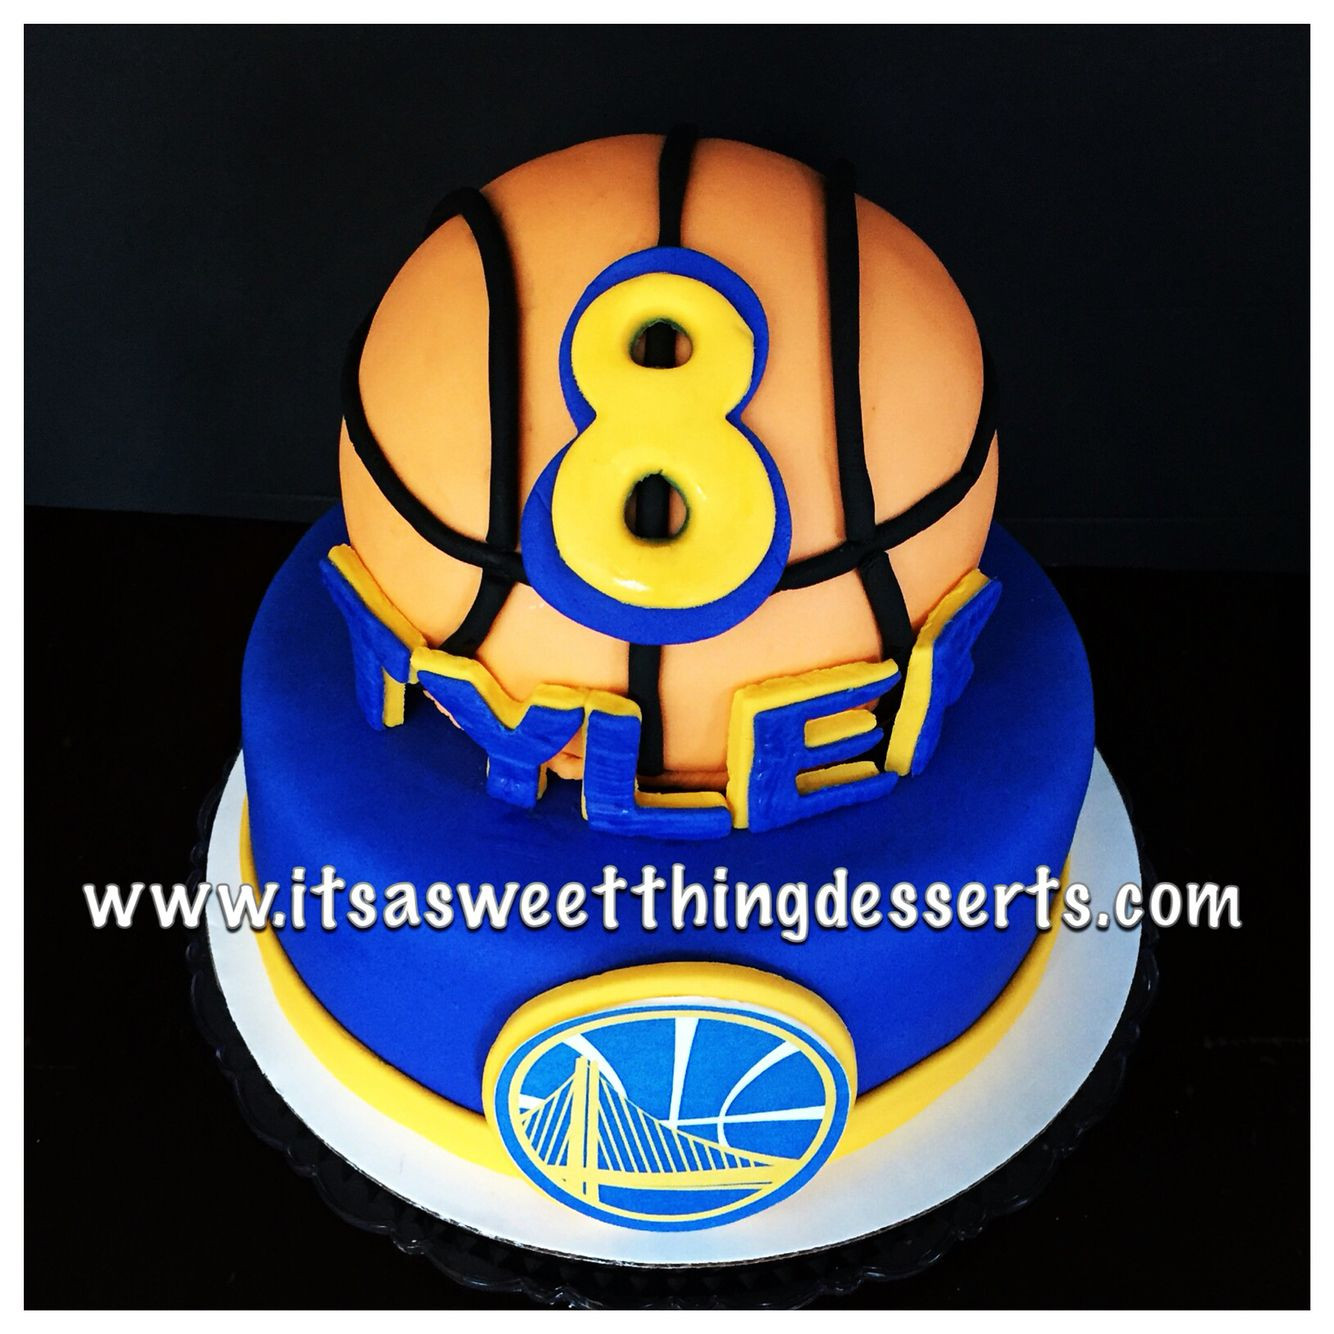 Best ideas about Golden State Warriors Birthday Cake
. Save or Pin Golden State Warriors themed Cake cake design Now.